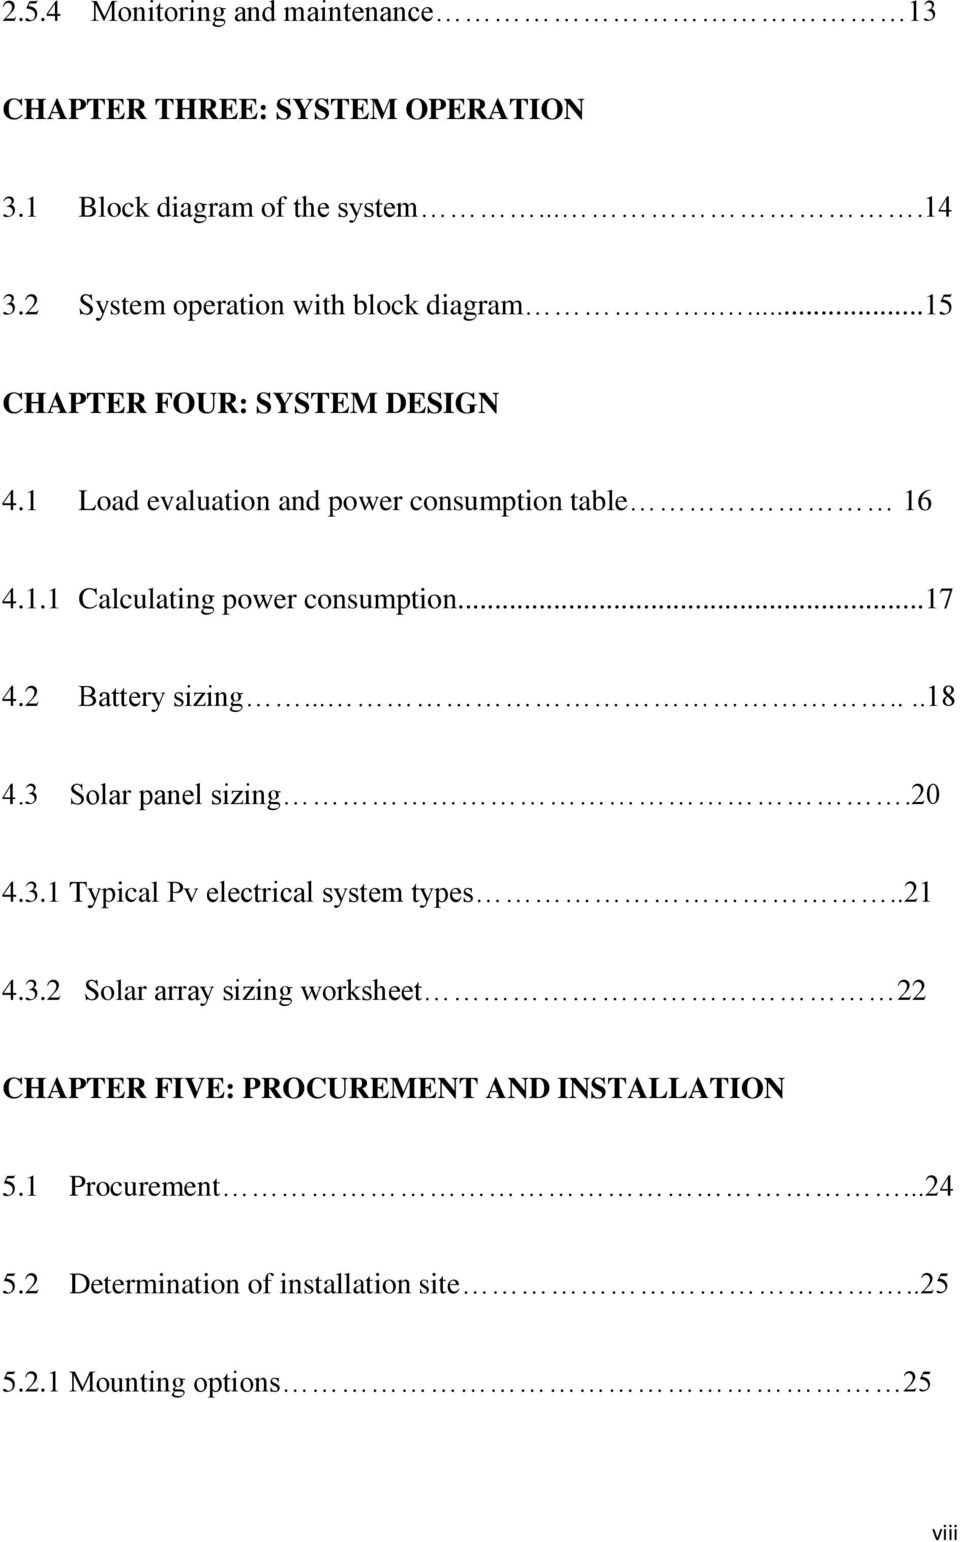 Pv System Pv System Sizing Worksheet Inside Solar Sizing Worksheet